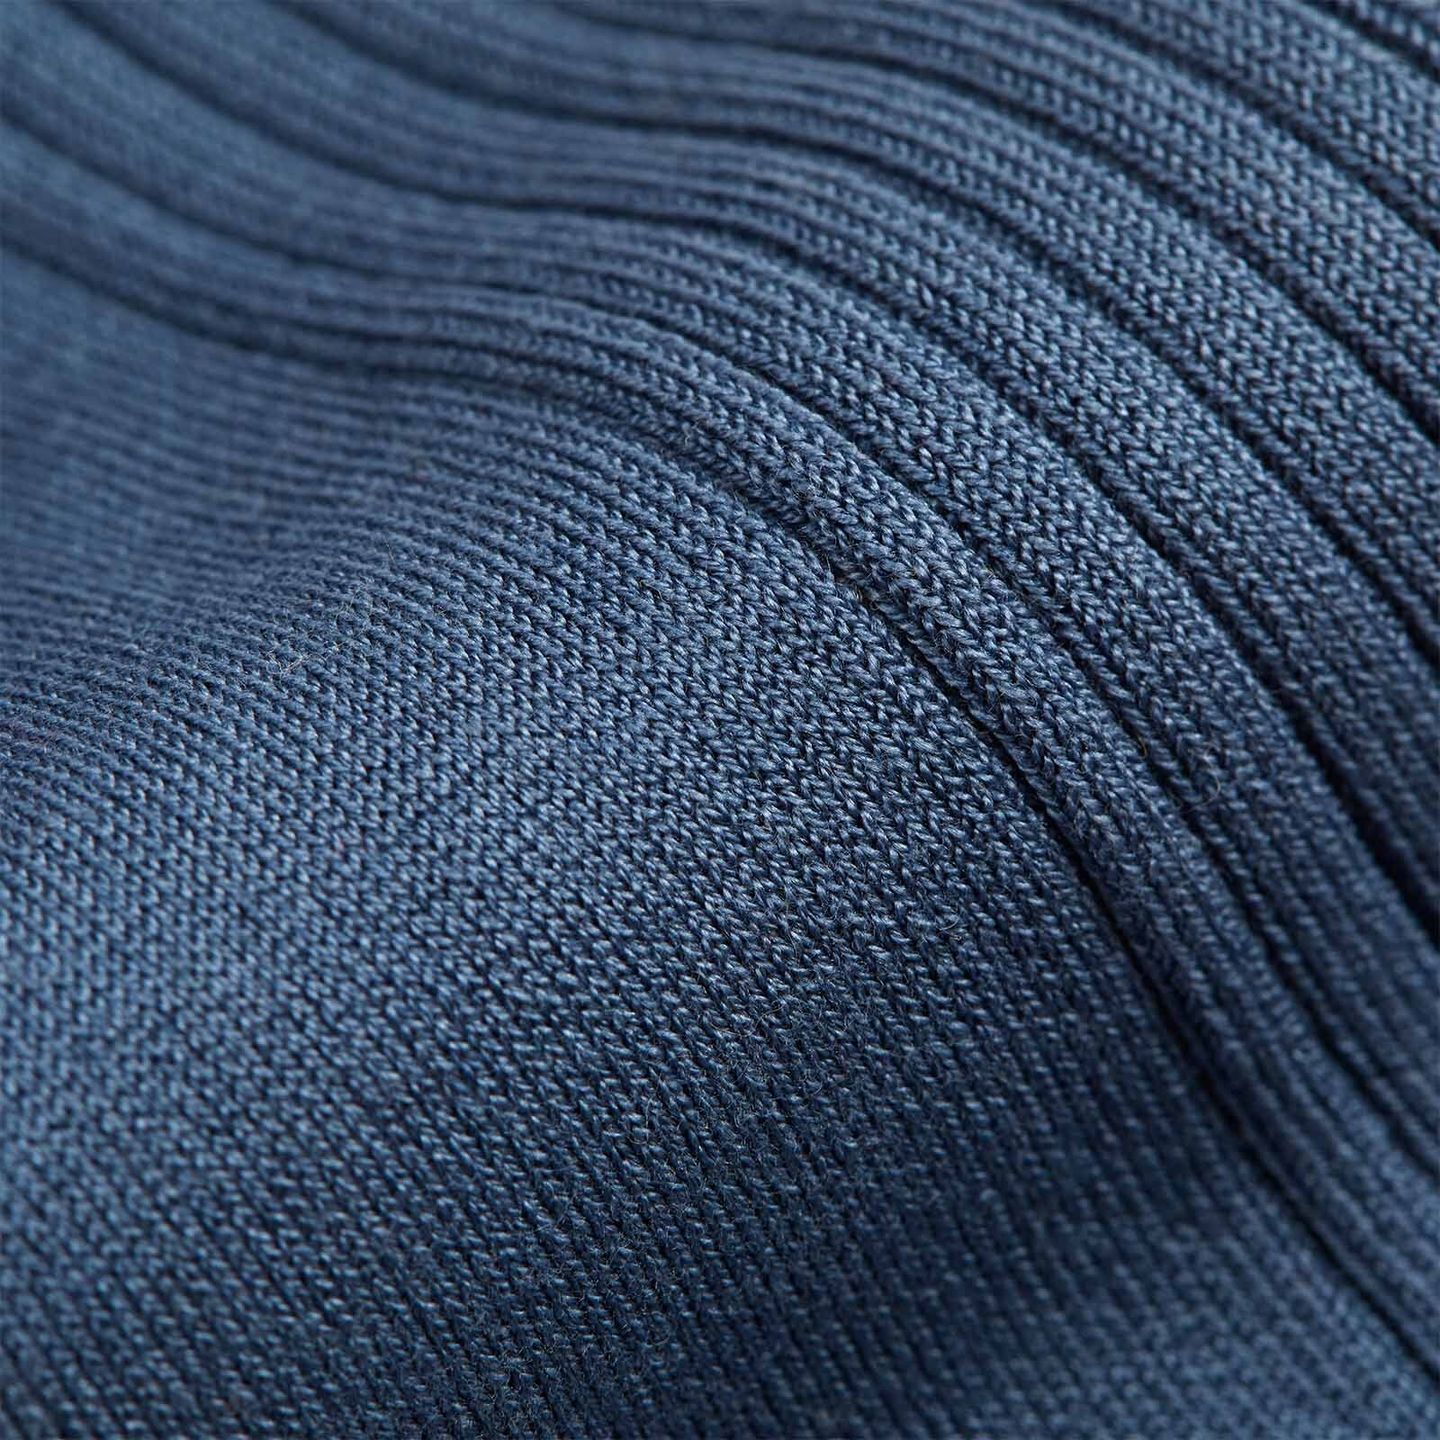 A close up of a dark blue socks material